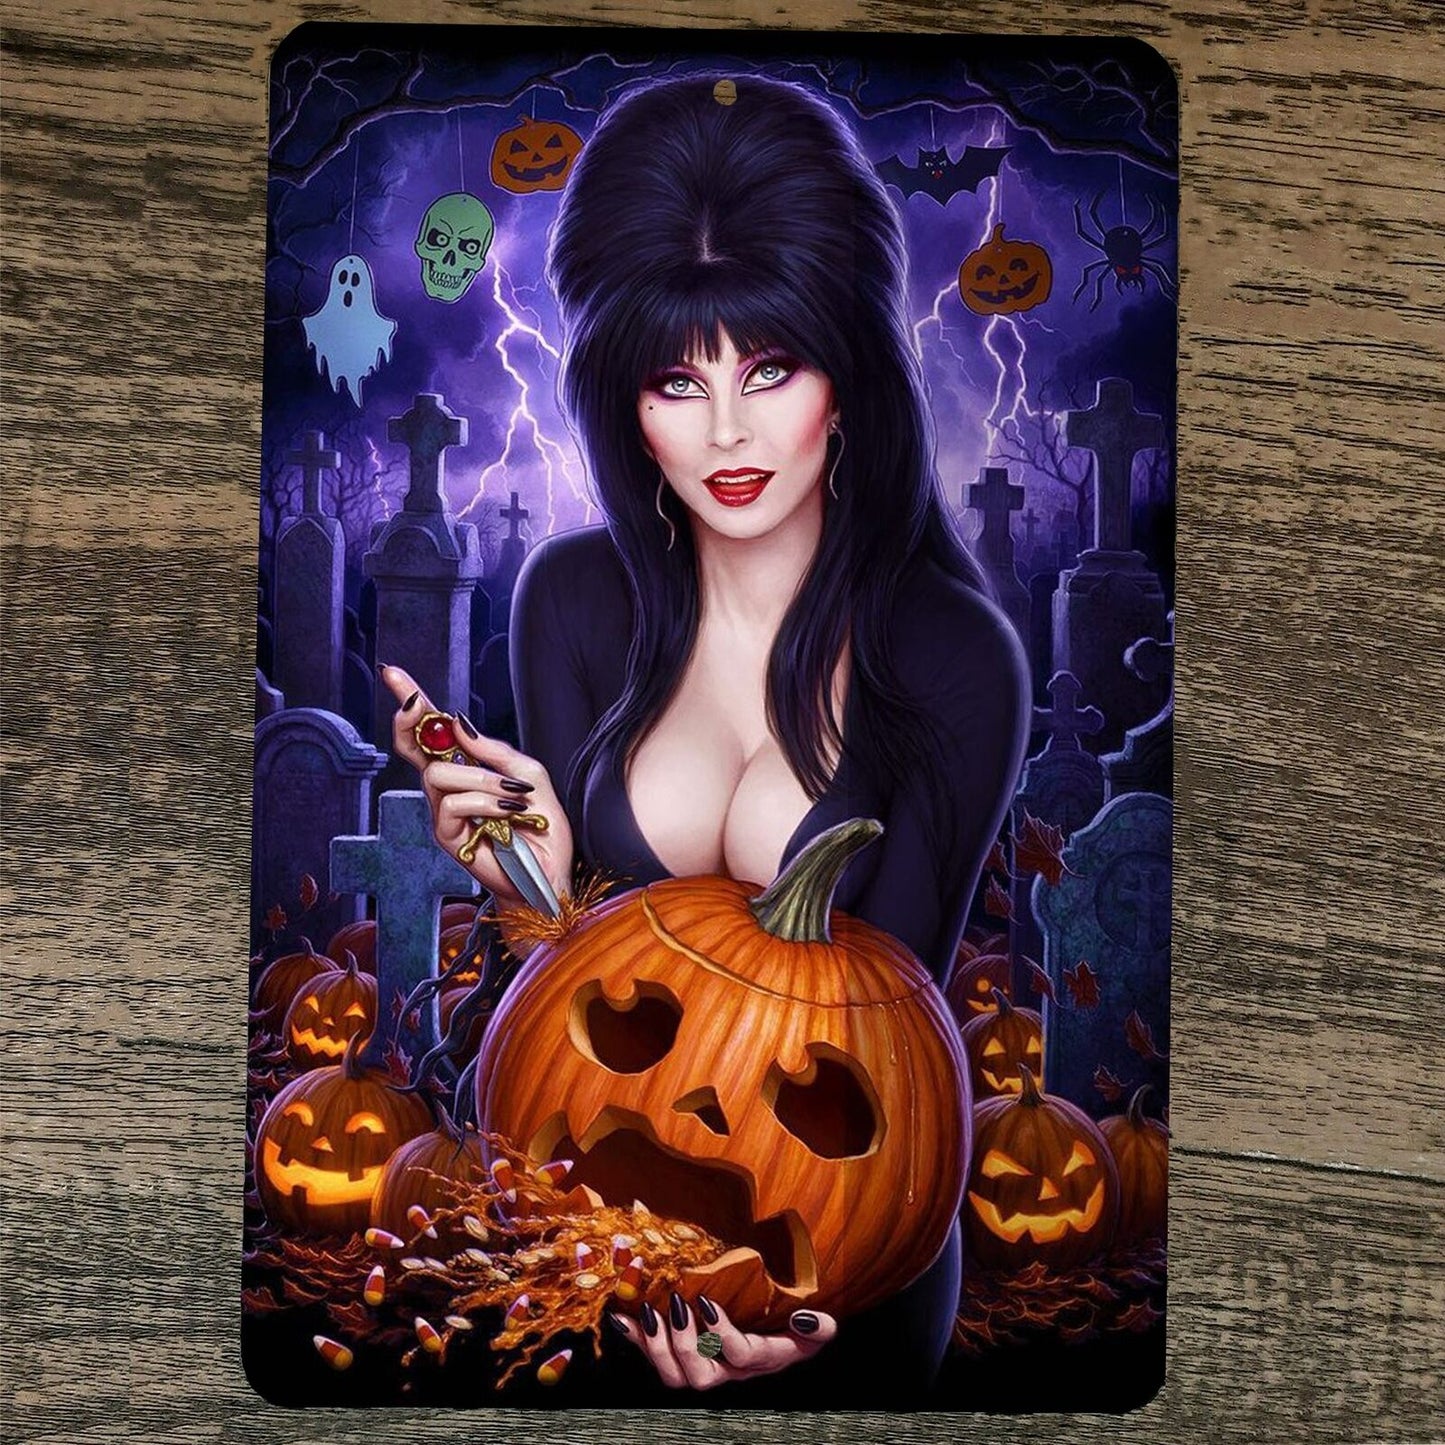 Pumpkin Carving Elvira Mistress of the Dark 8x12 Metal Wall Sign Poster